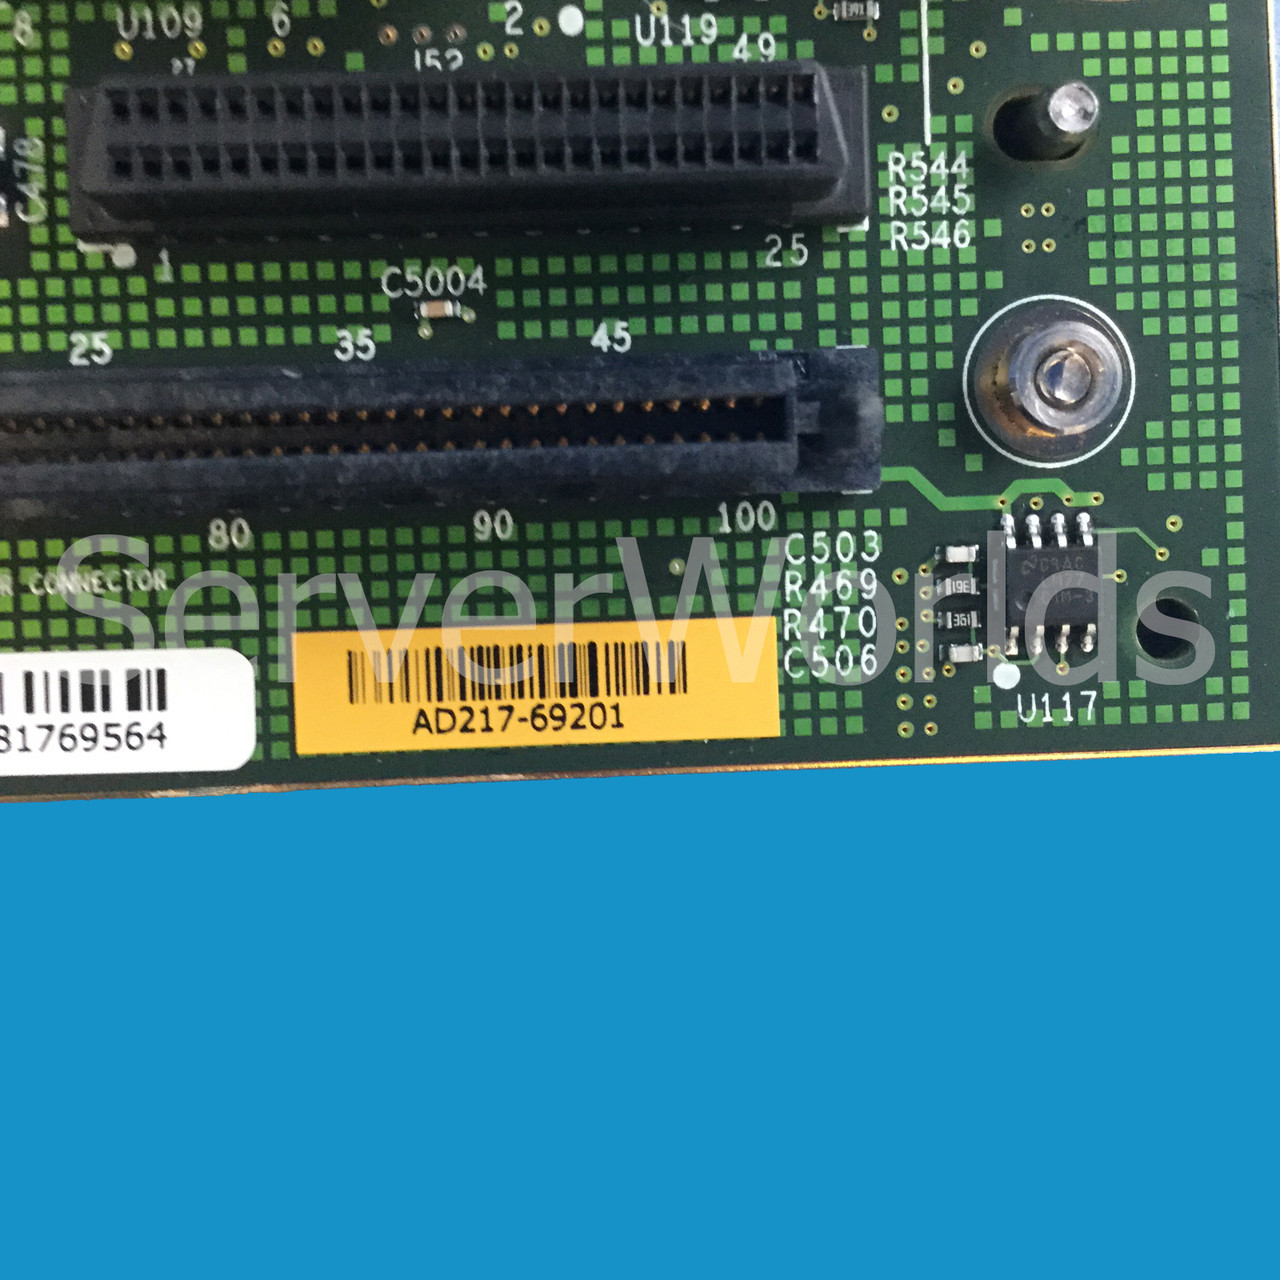 HP AD217-69201 BL460c Itanium 9100 SRS 667MHZ Dual core system board 